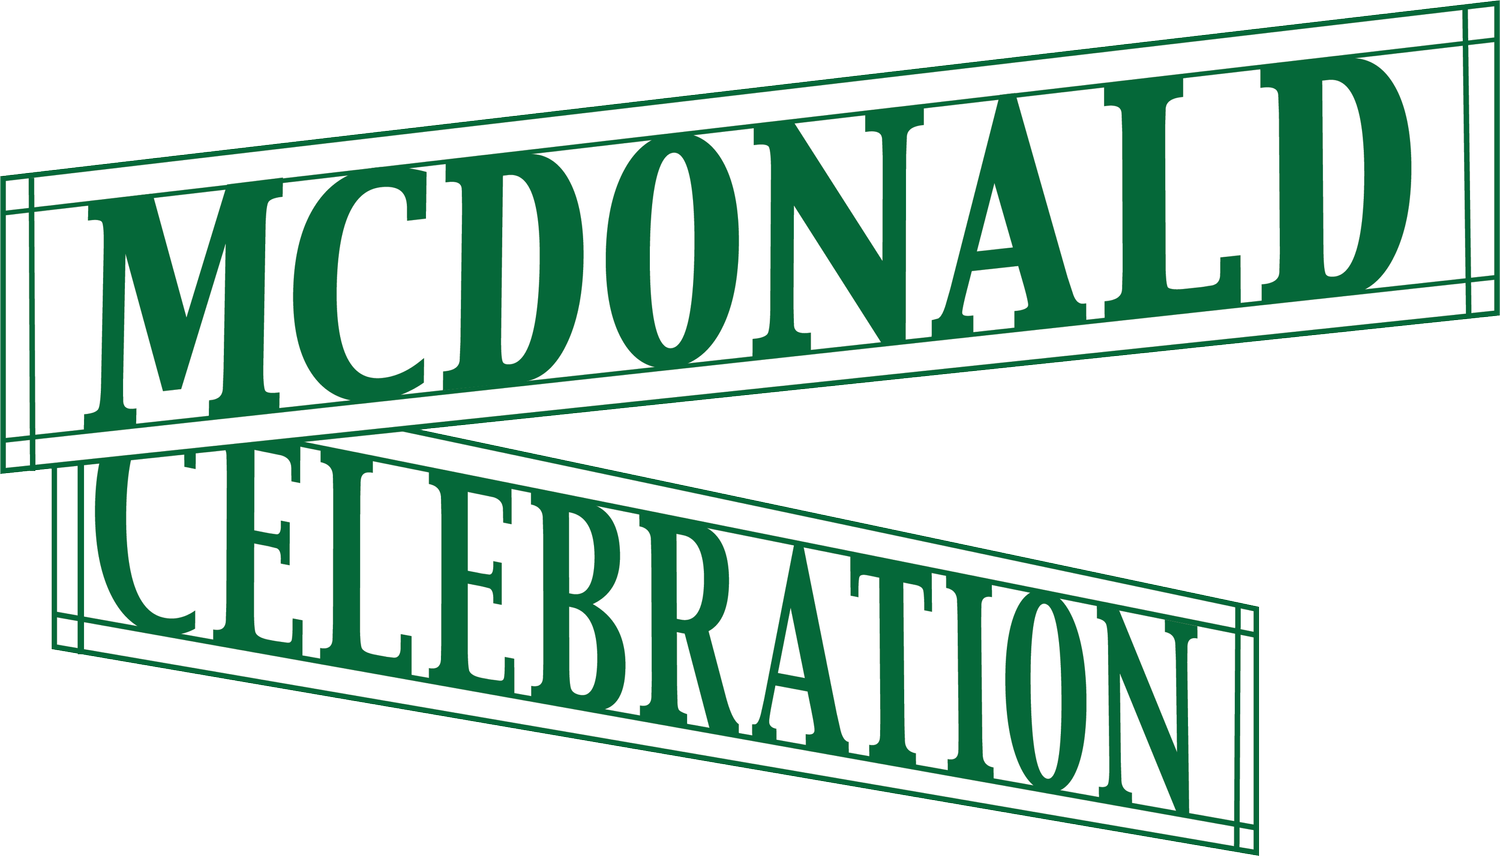 McDonald Celebration